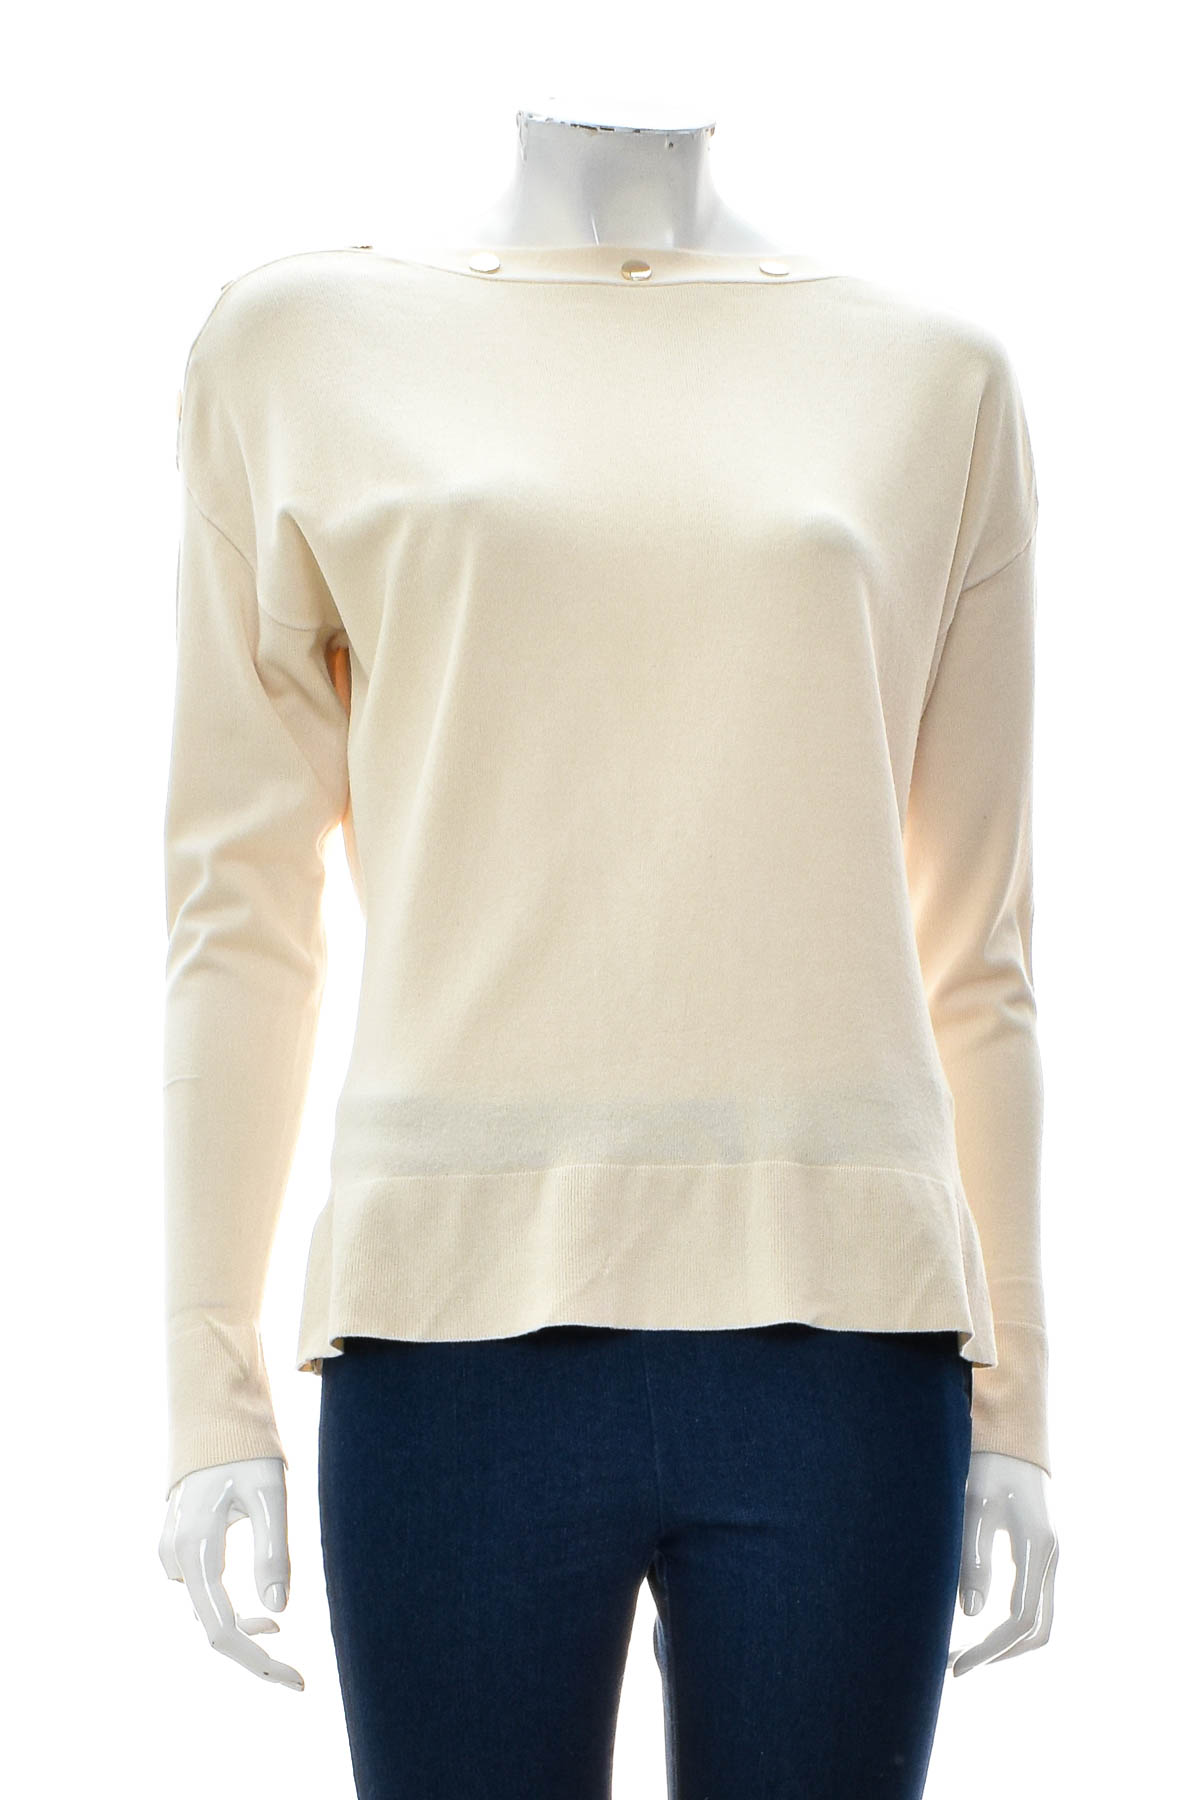 Women's sweater - Orsay - 0